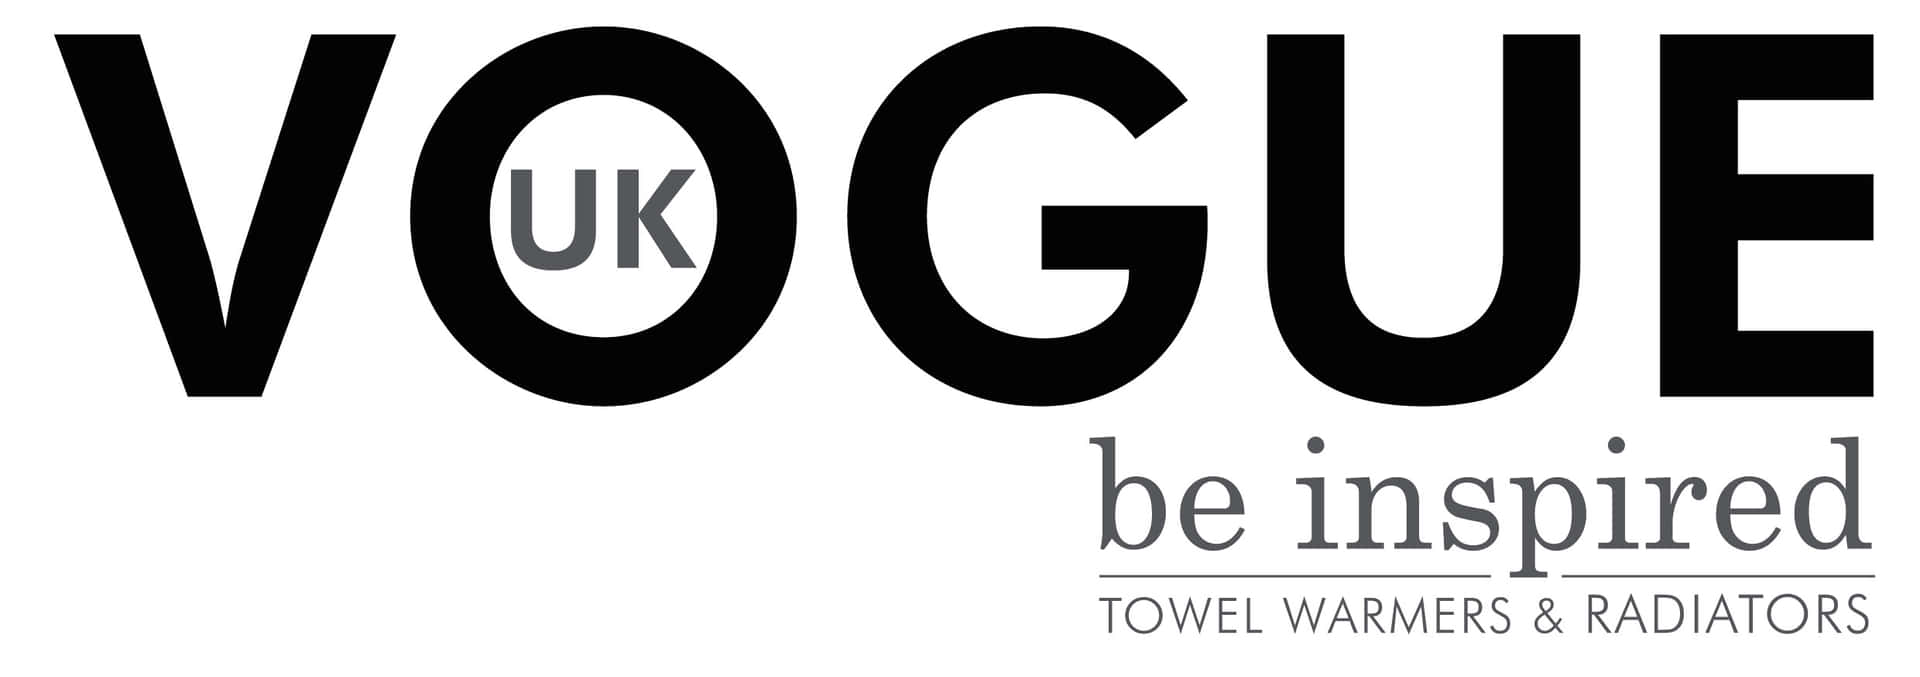 Vogue U K Towel Warmers Logo Wallpaper